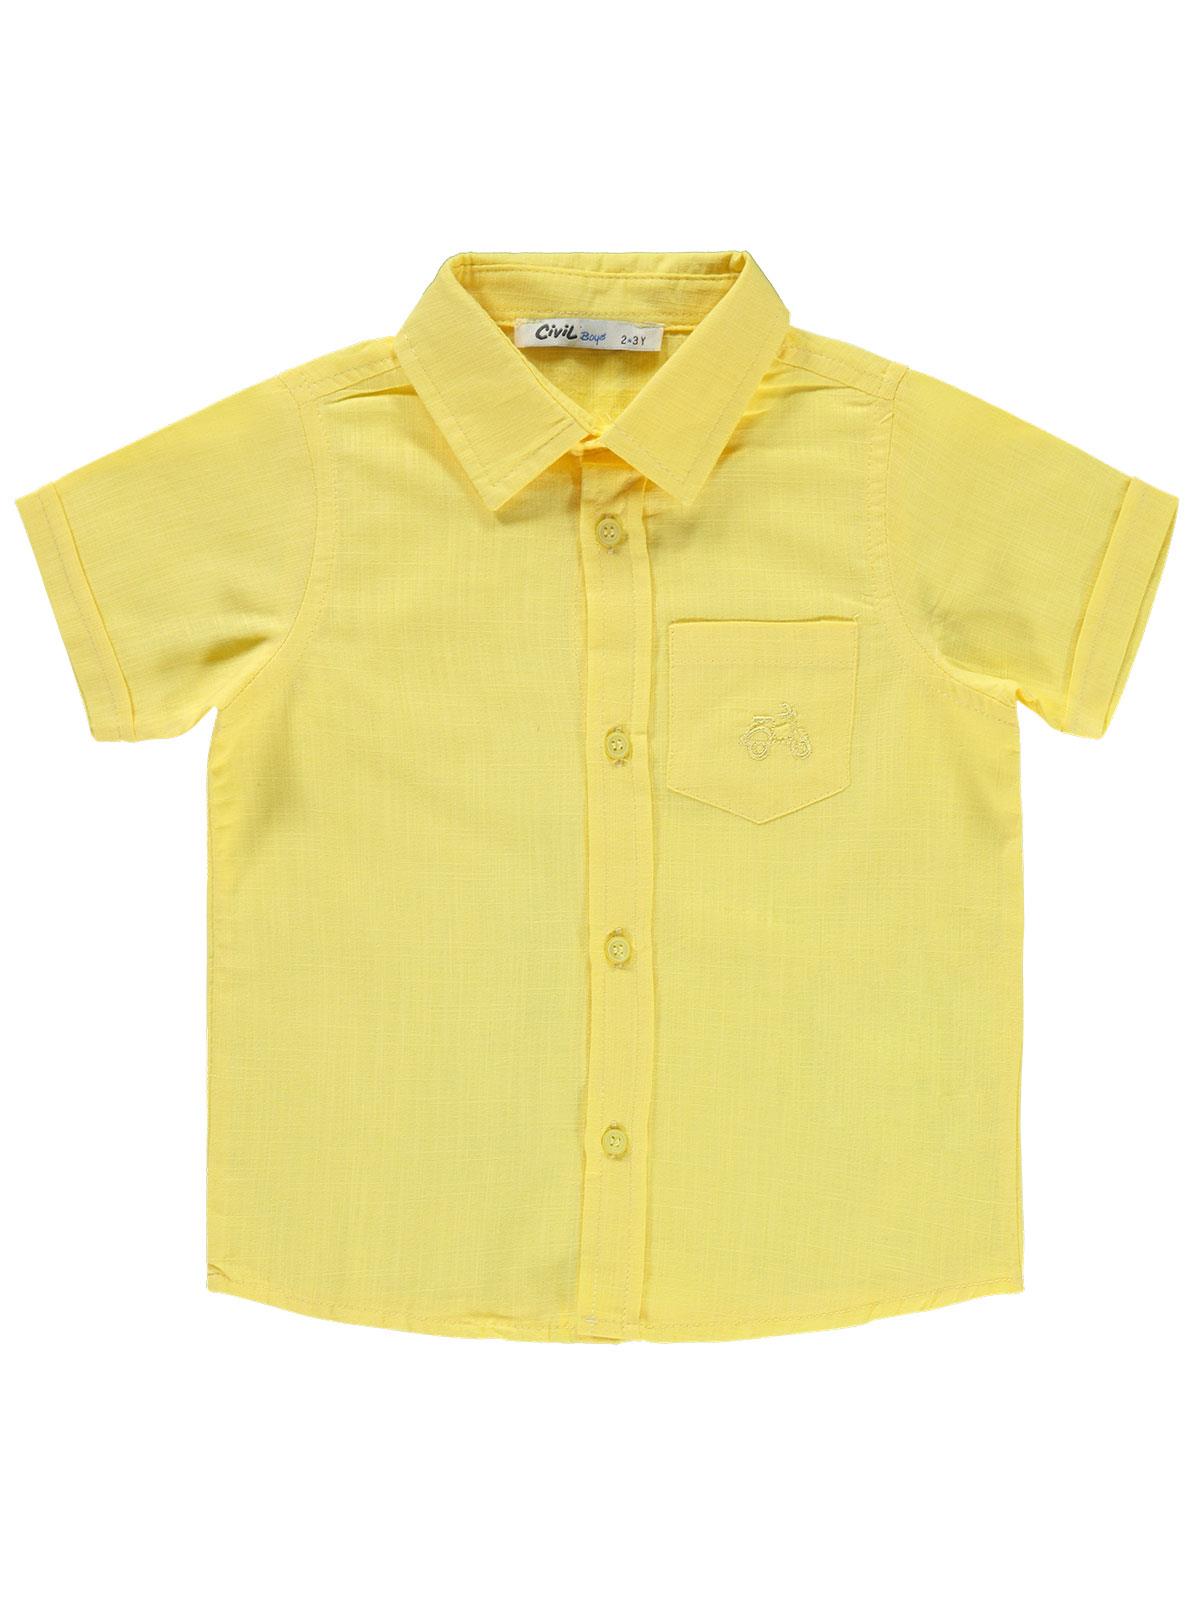 Civil Boys H/S Linen Collar Shirt F/O #2201-2 (S-22)